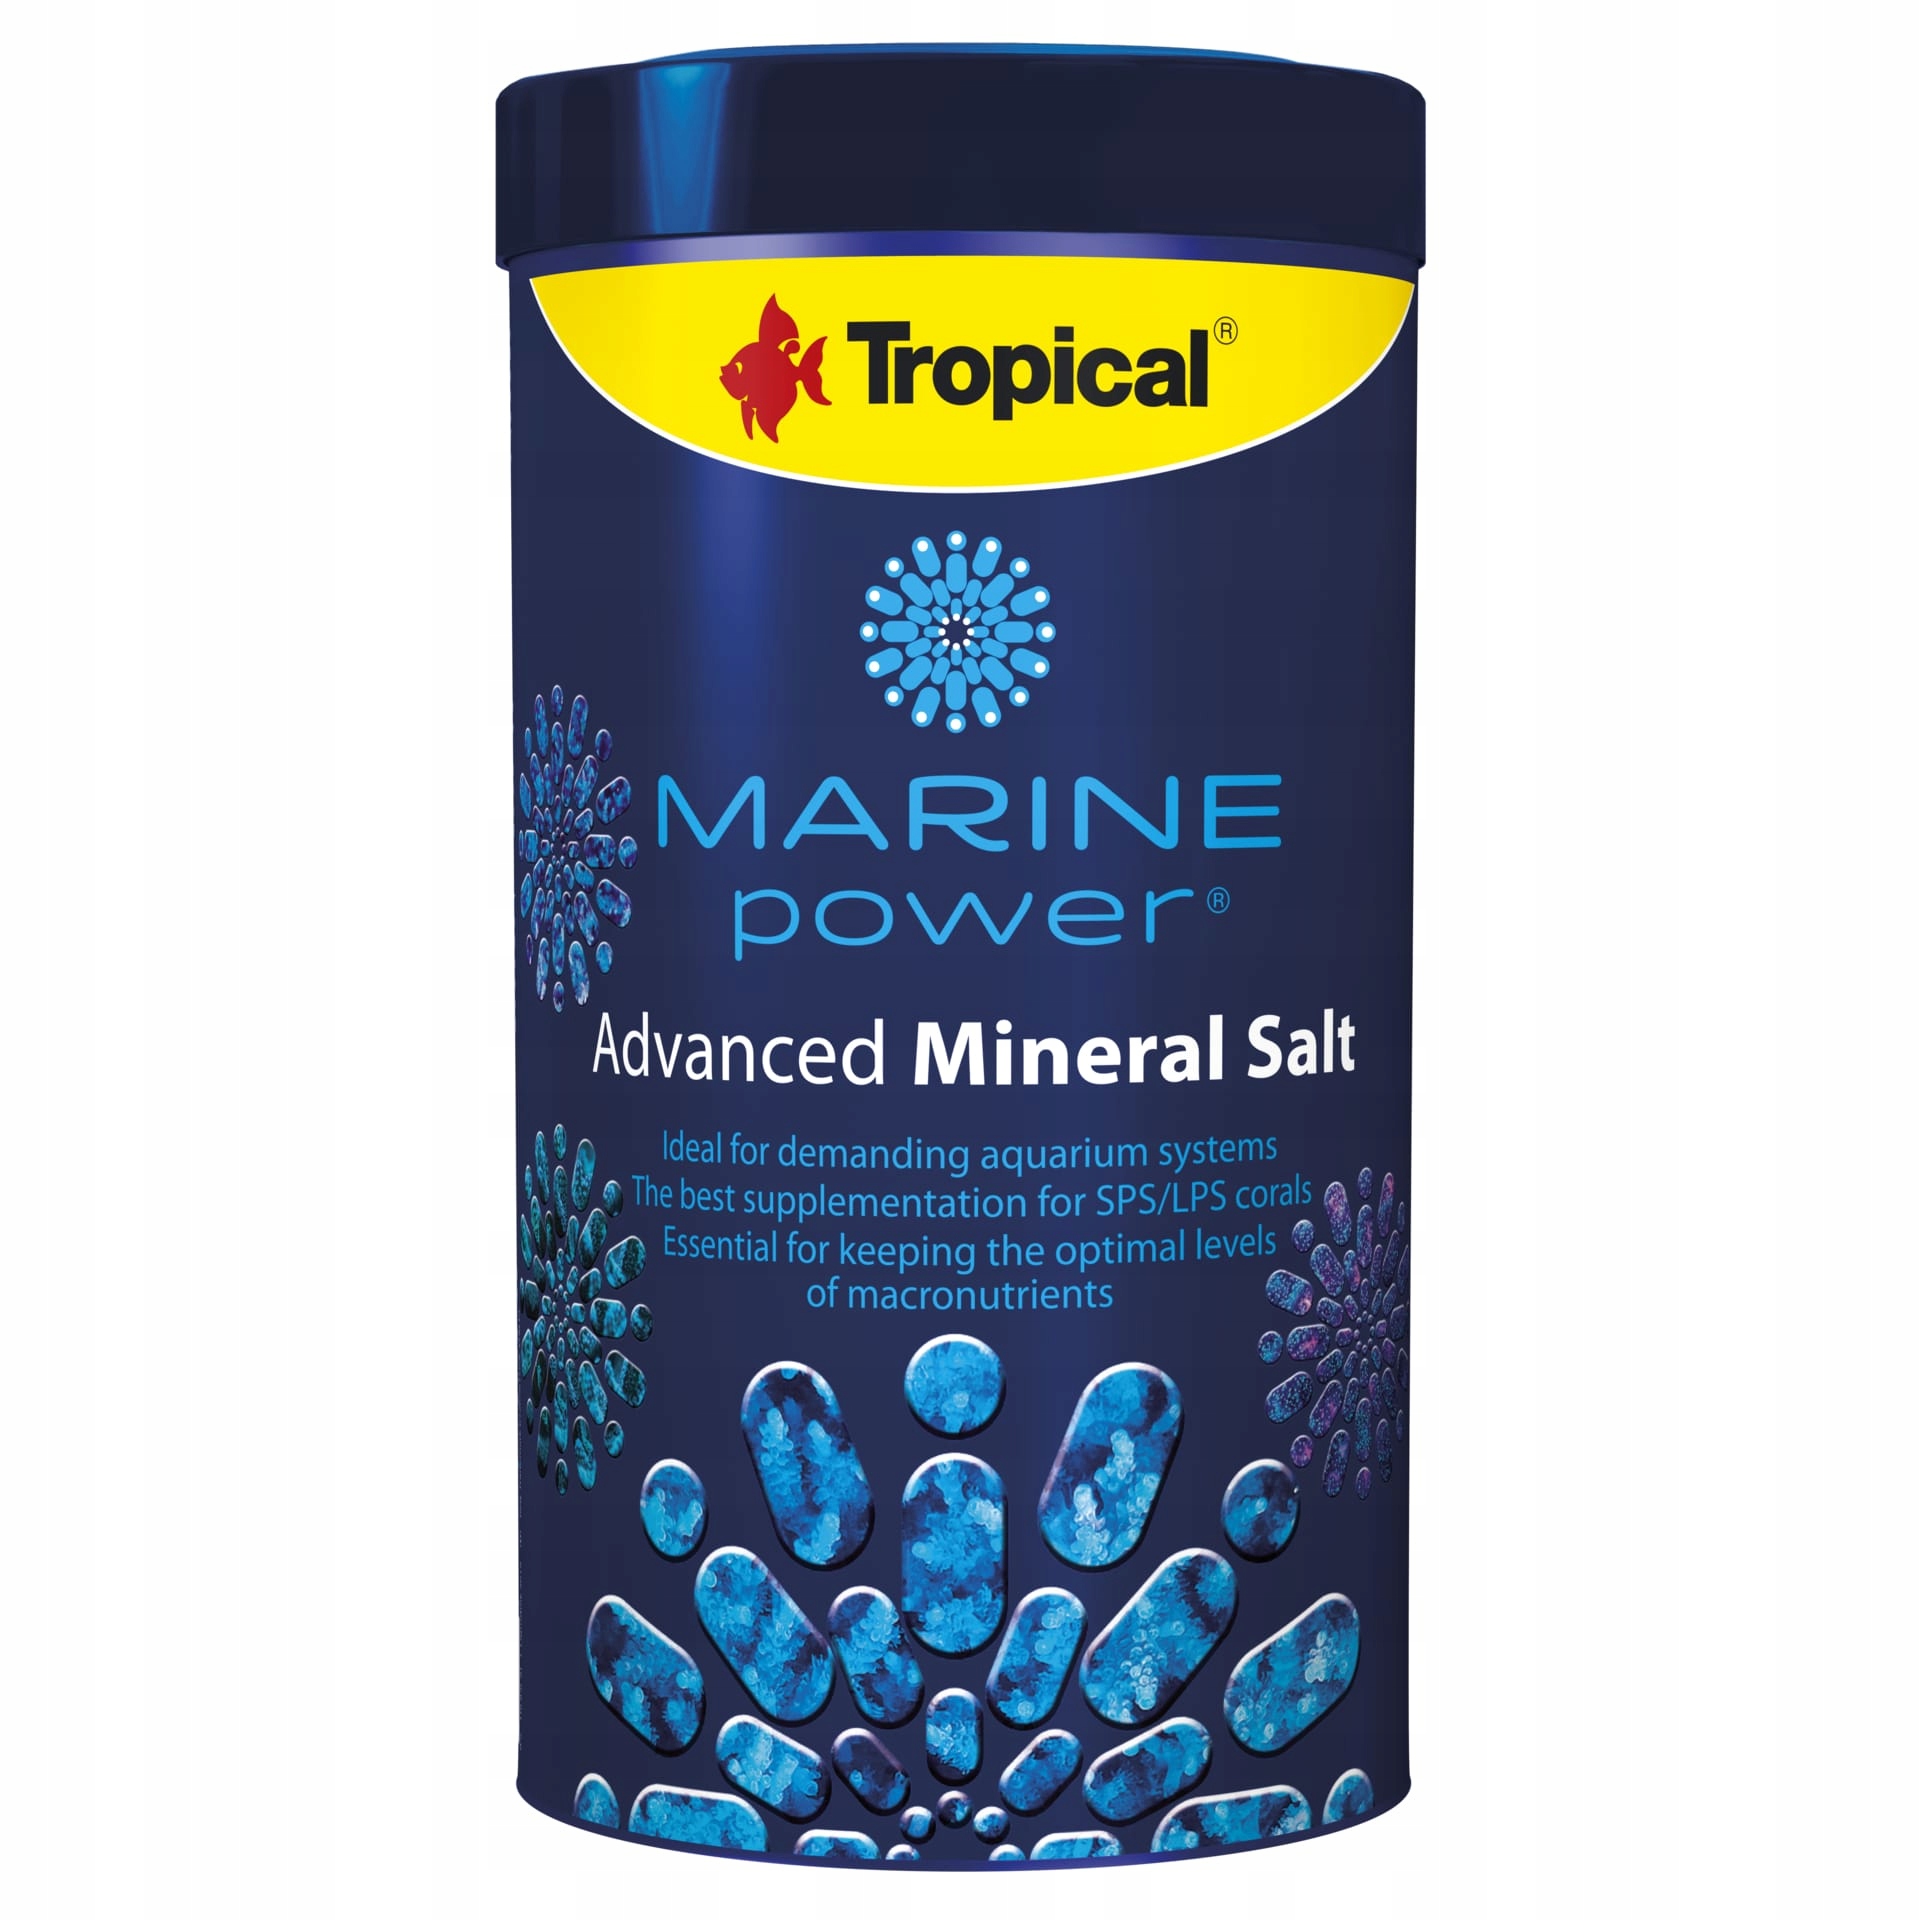 Mořská sůl Tropical Marine Power Advanced Mineral Salt 0,5 kg